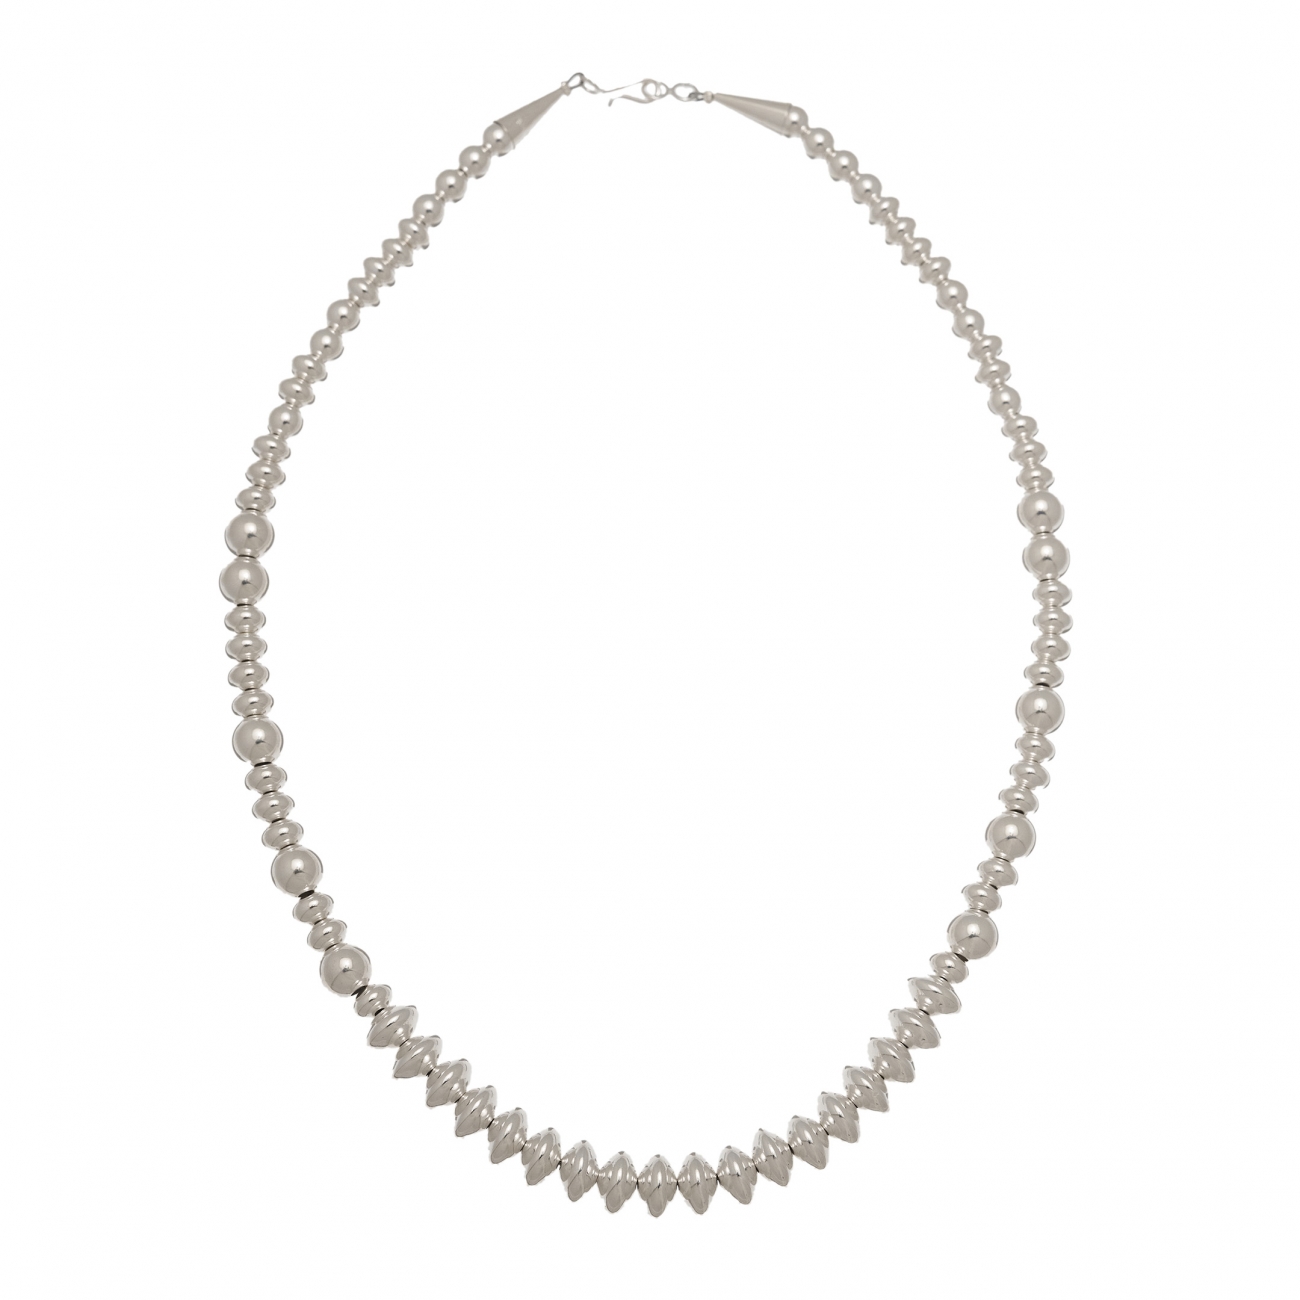 Women necklace CO197 in silver beads - Harpo Paris